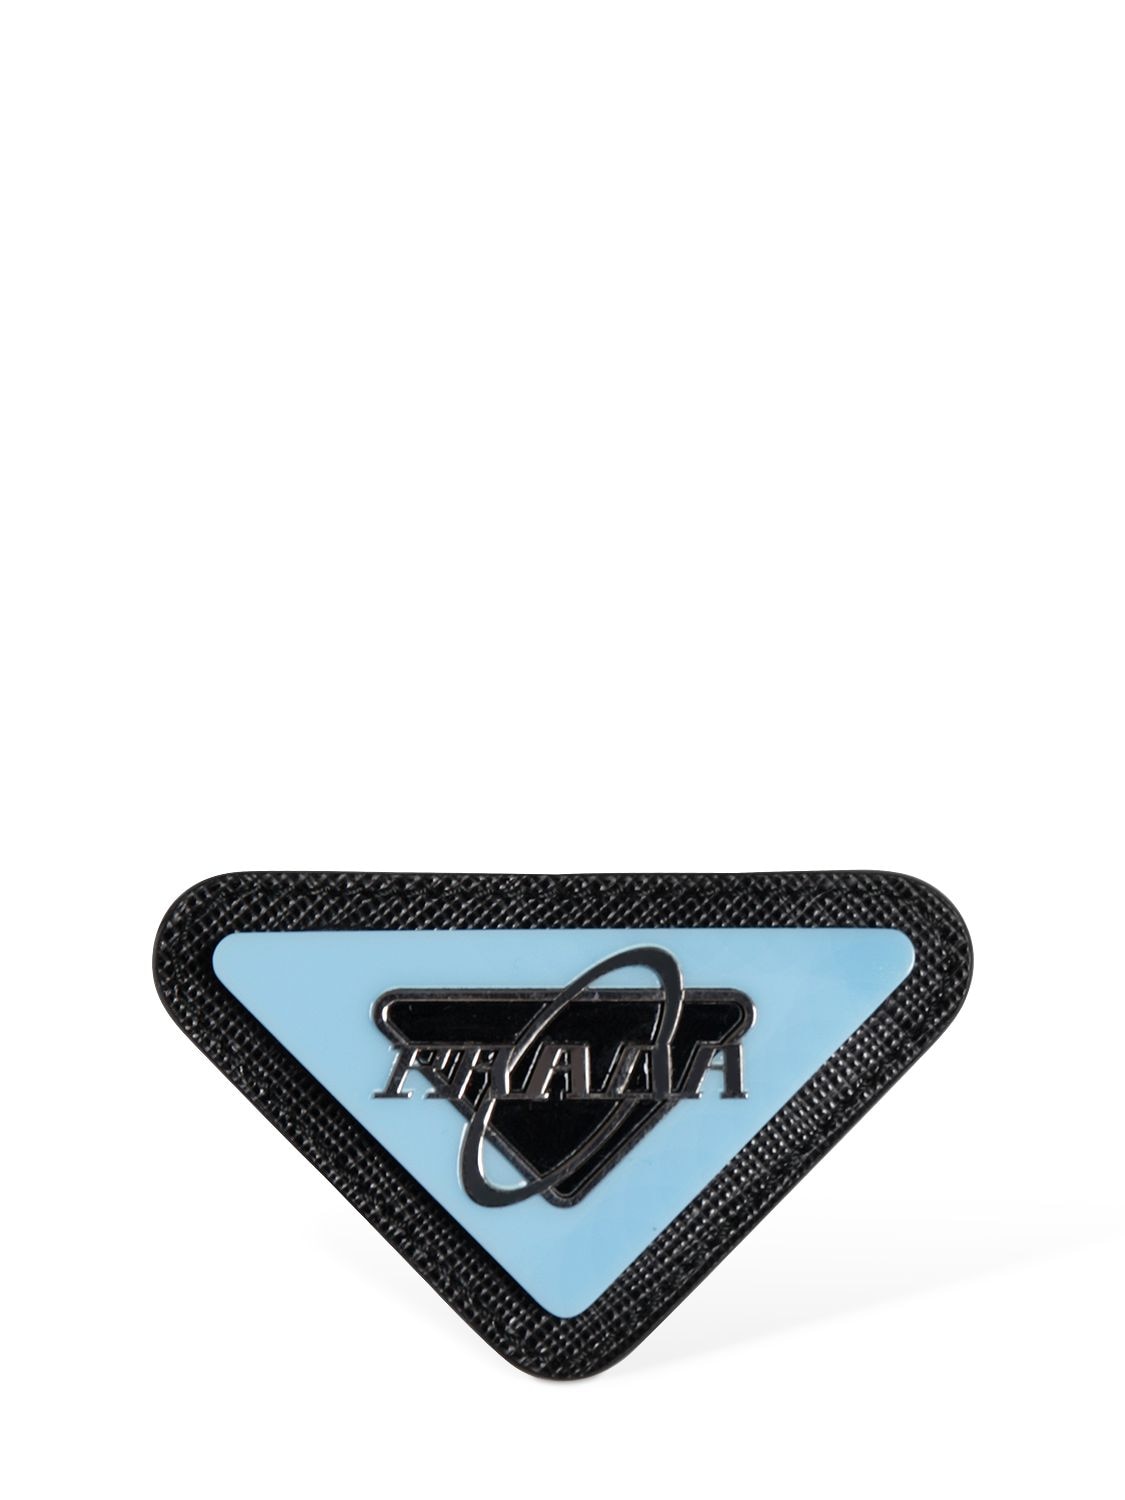 Prada Logo Saffiano Leather Pin In Black,light Blue